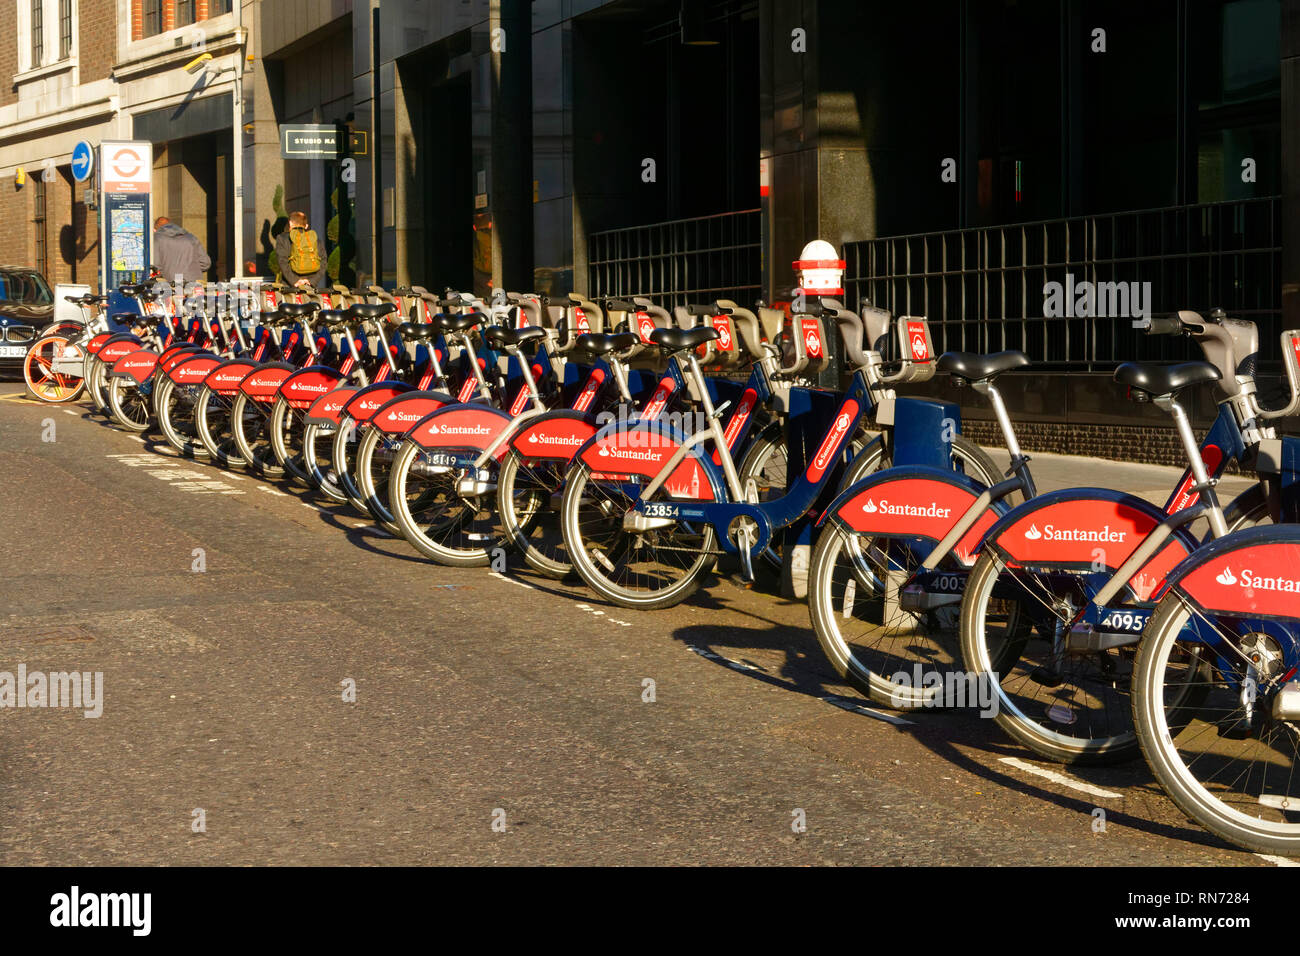 Santander rental bikes in a London street, London, United Kingdom. Stock Photo